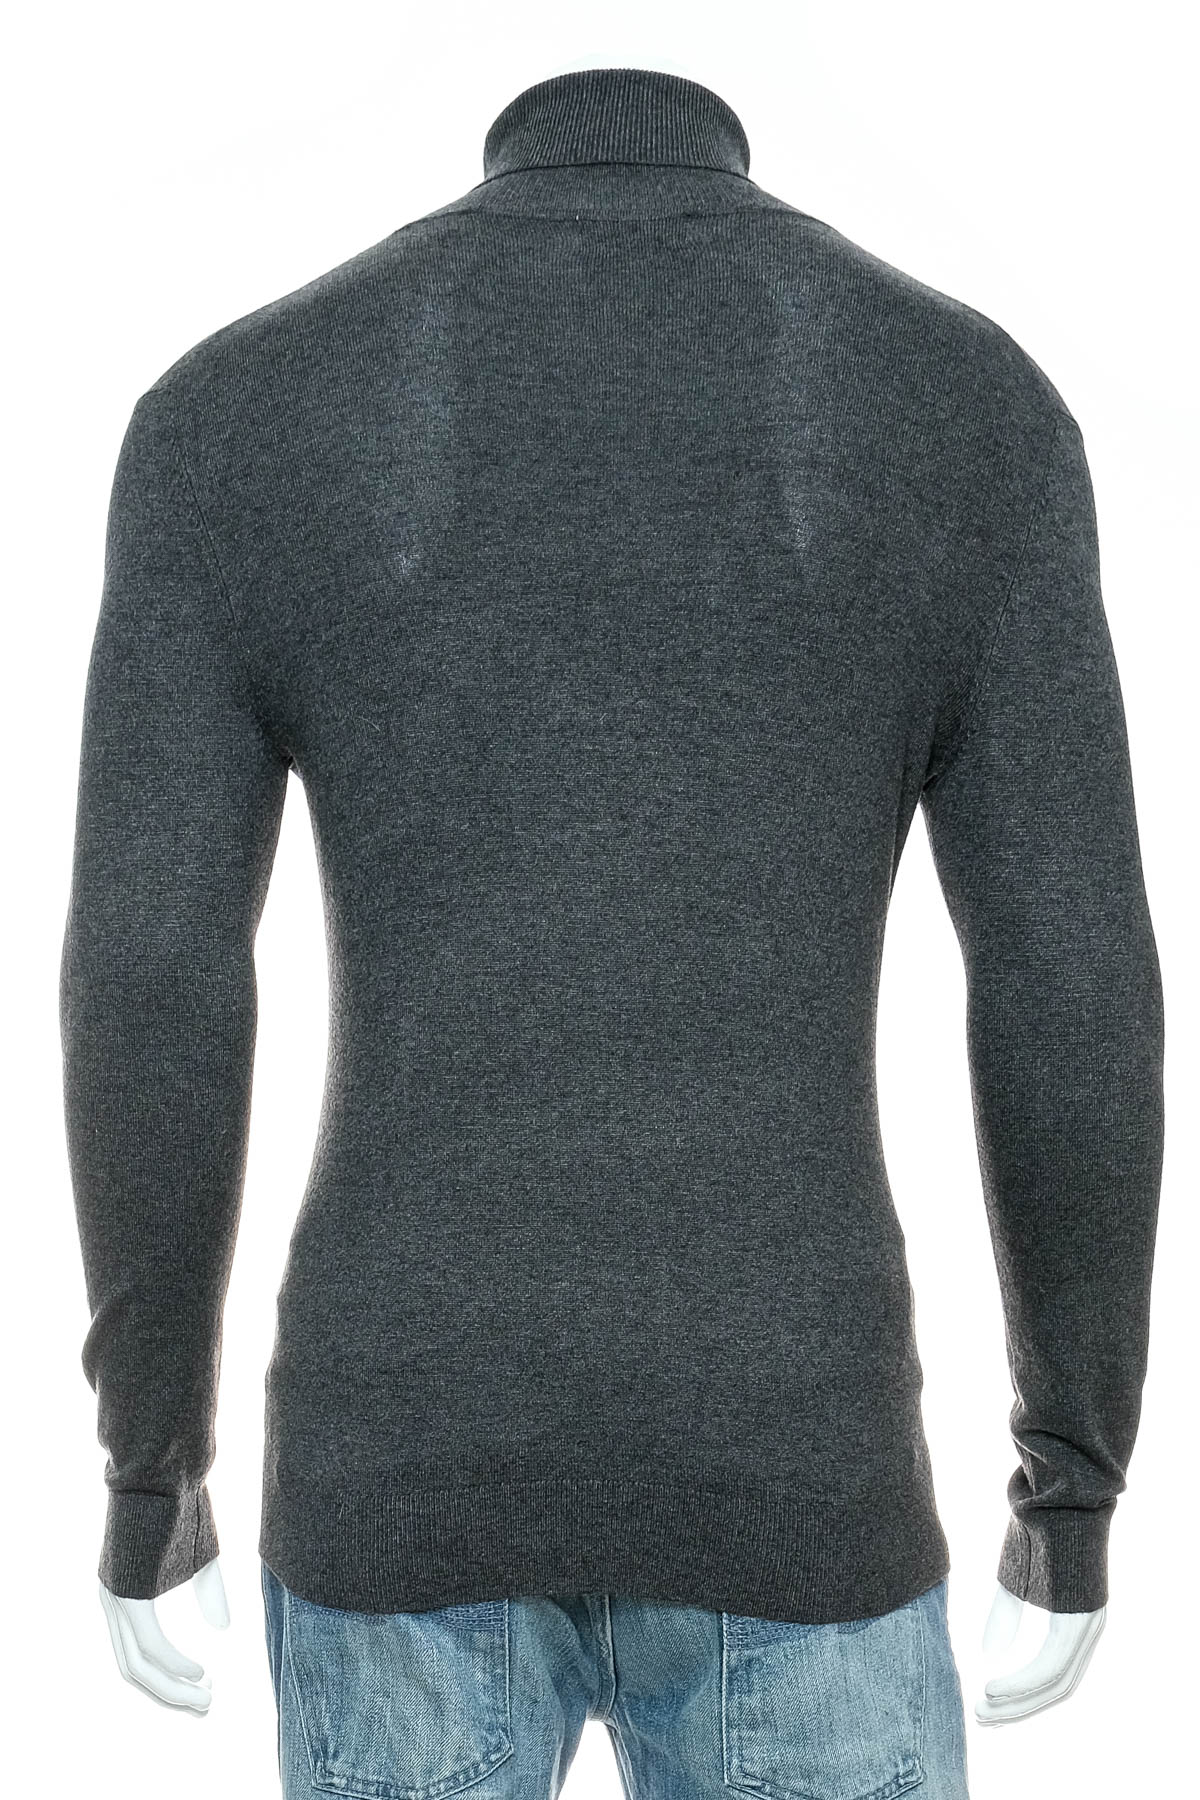 Men's sweater - The Basics x C&A - 1